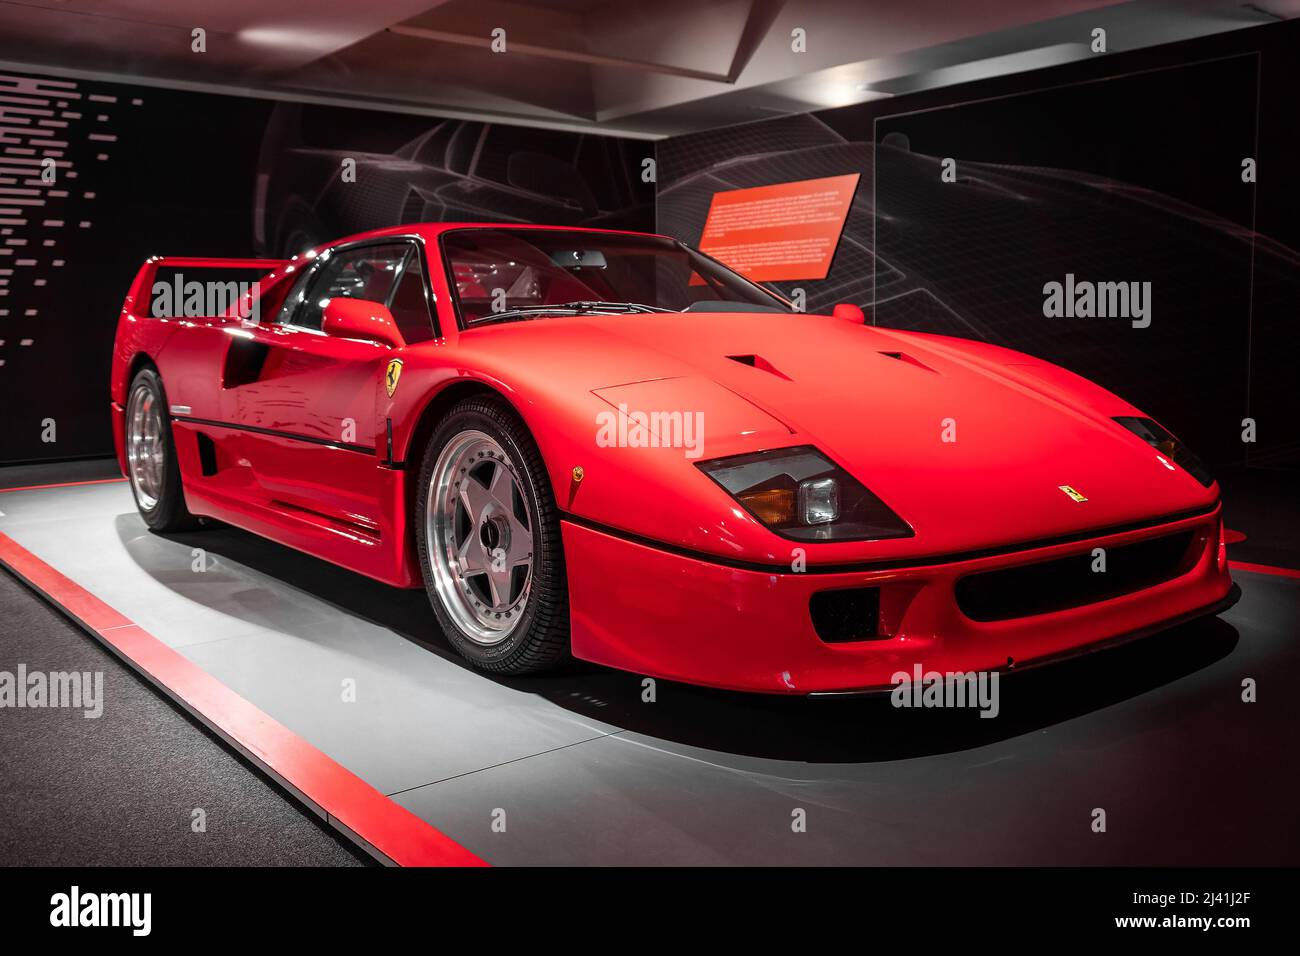 Ferrari car F40 model in the Ferrari museum of Maranello Stock Photo